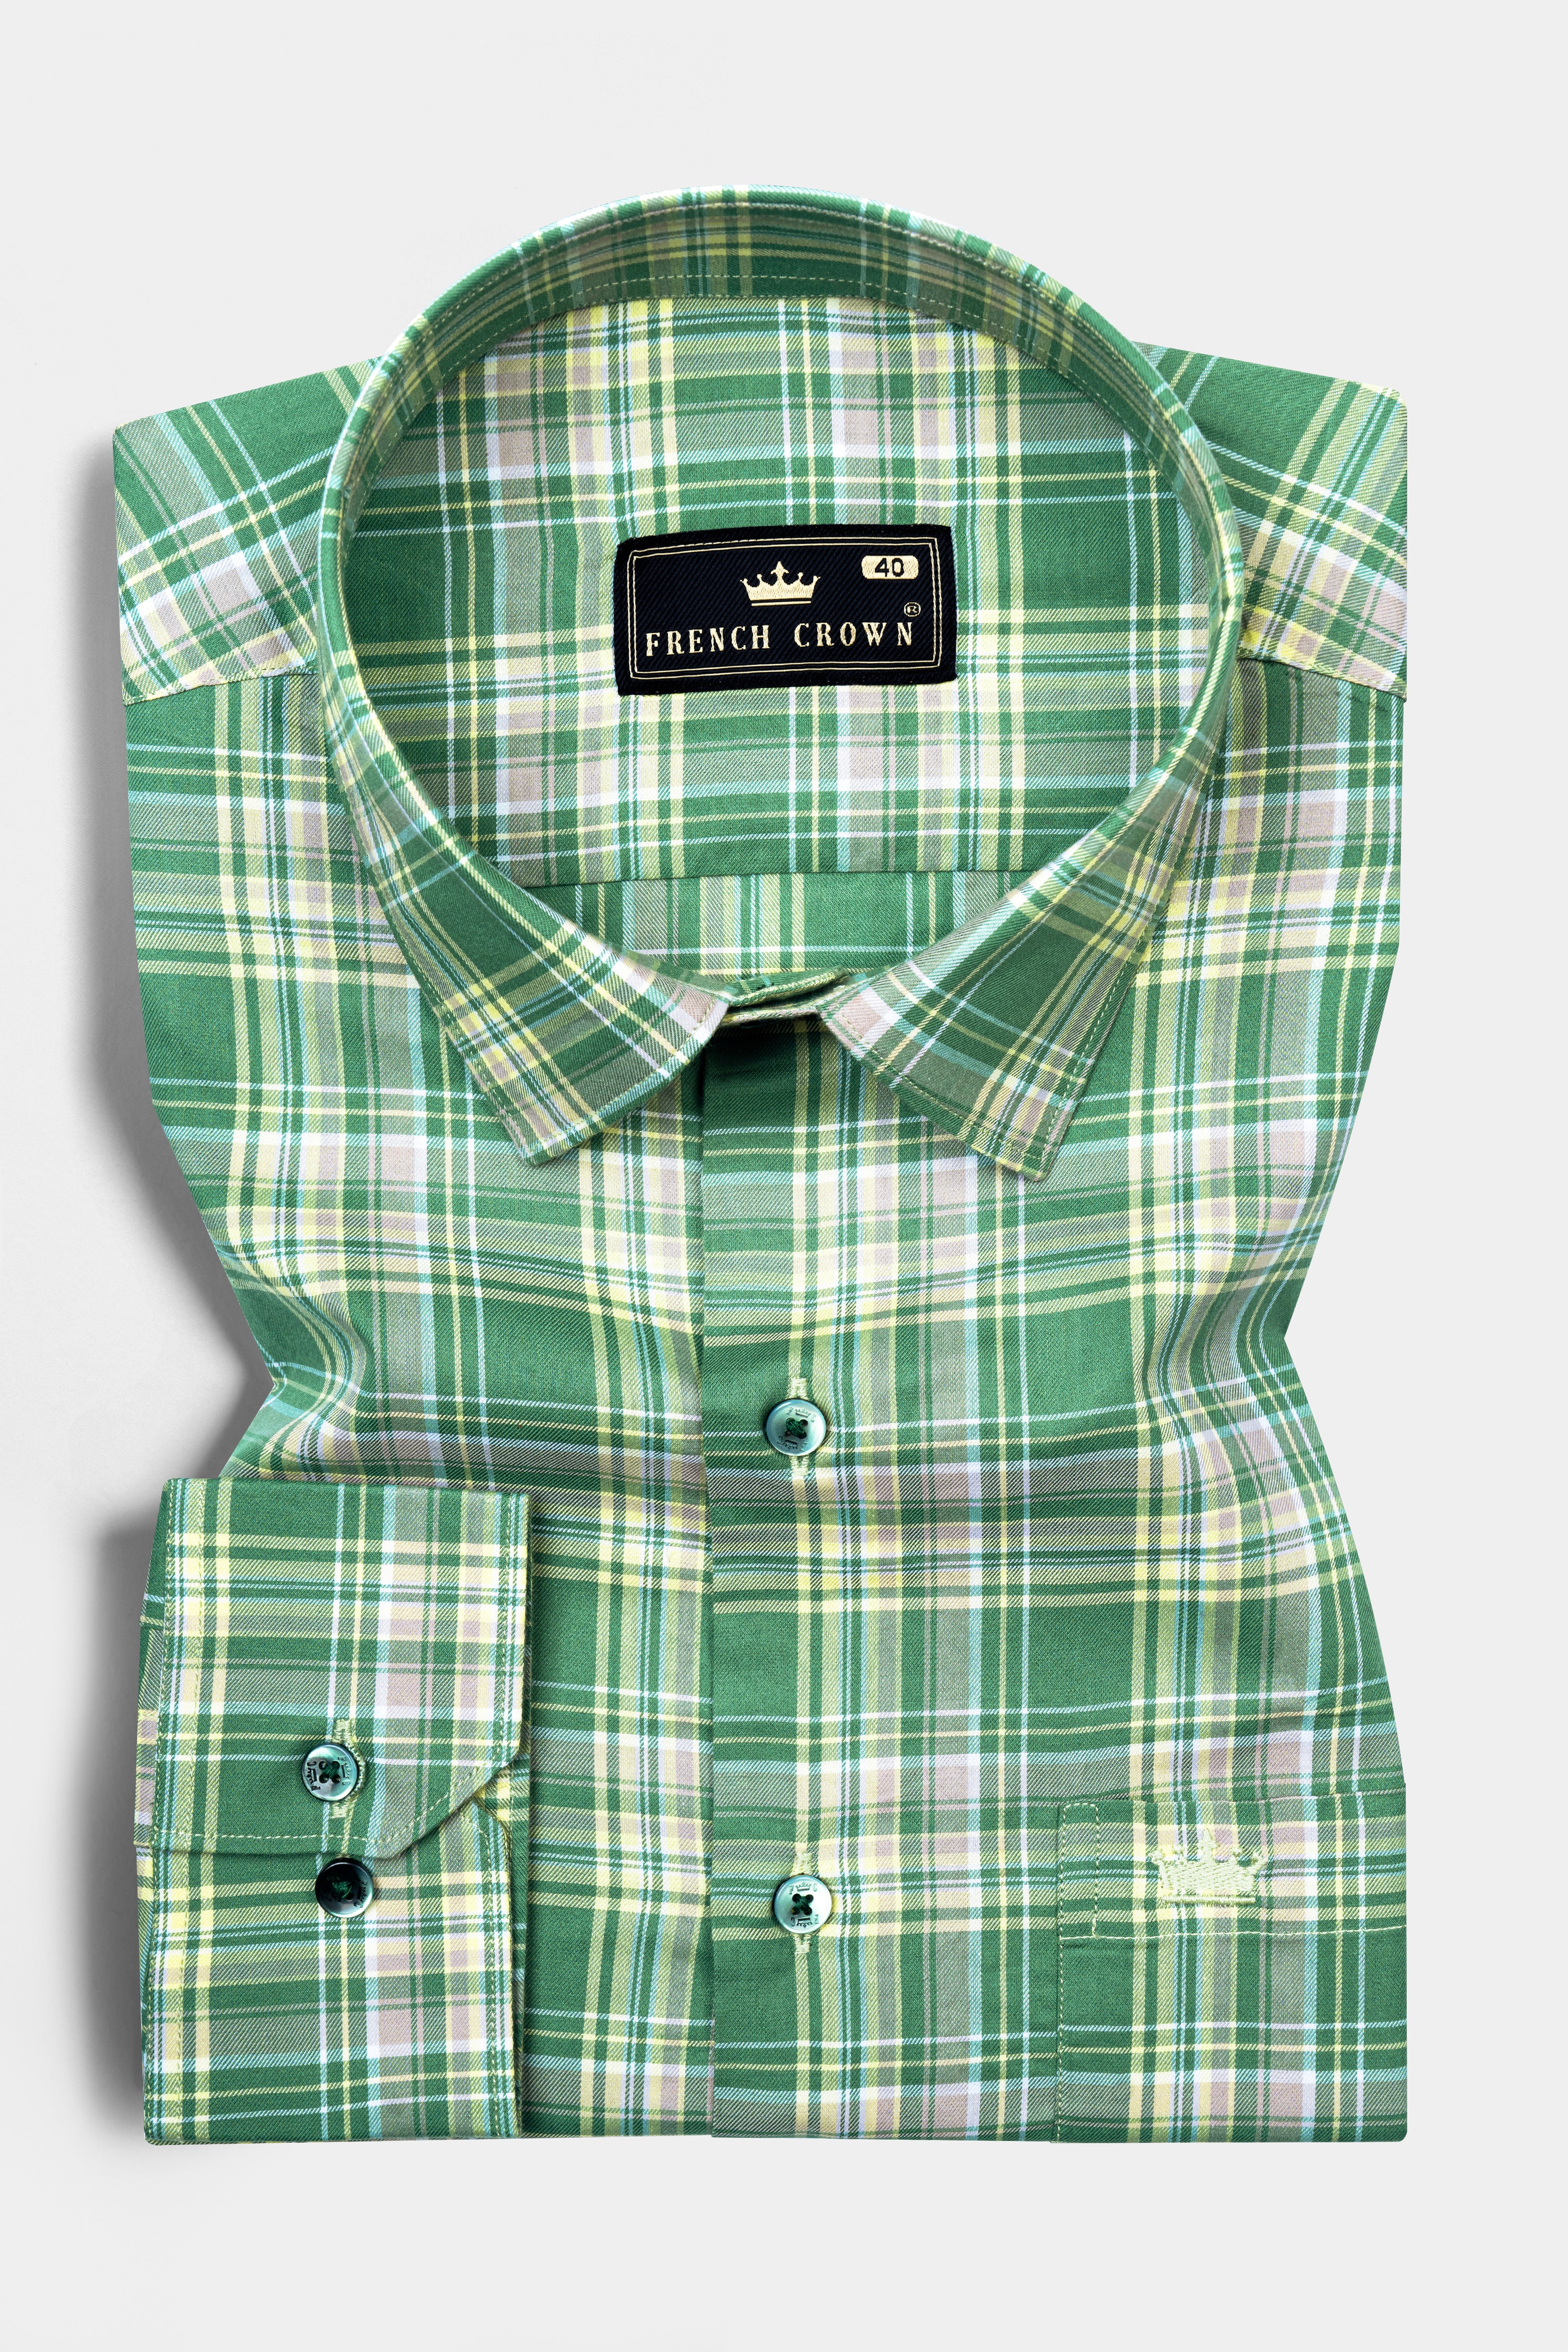 Viridian Green with Cloud Gray Plaid super Soft Premium Cotton Shirt